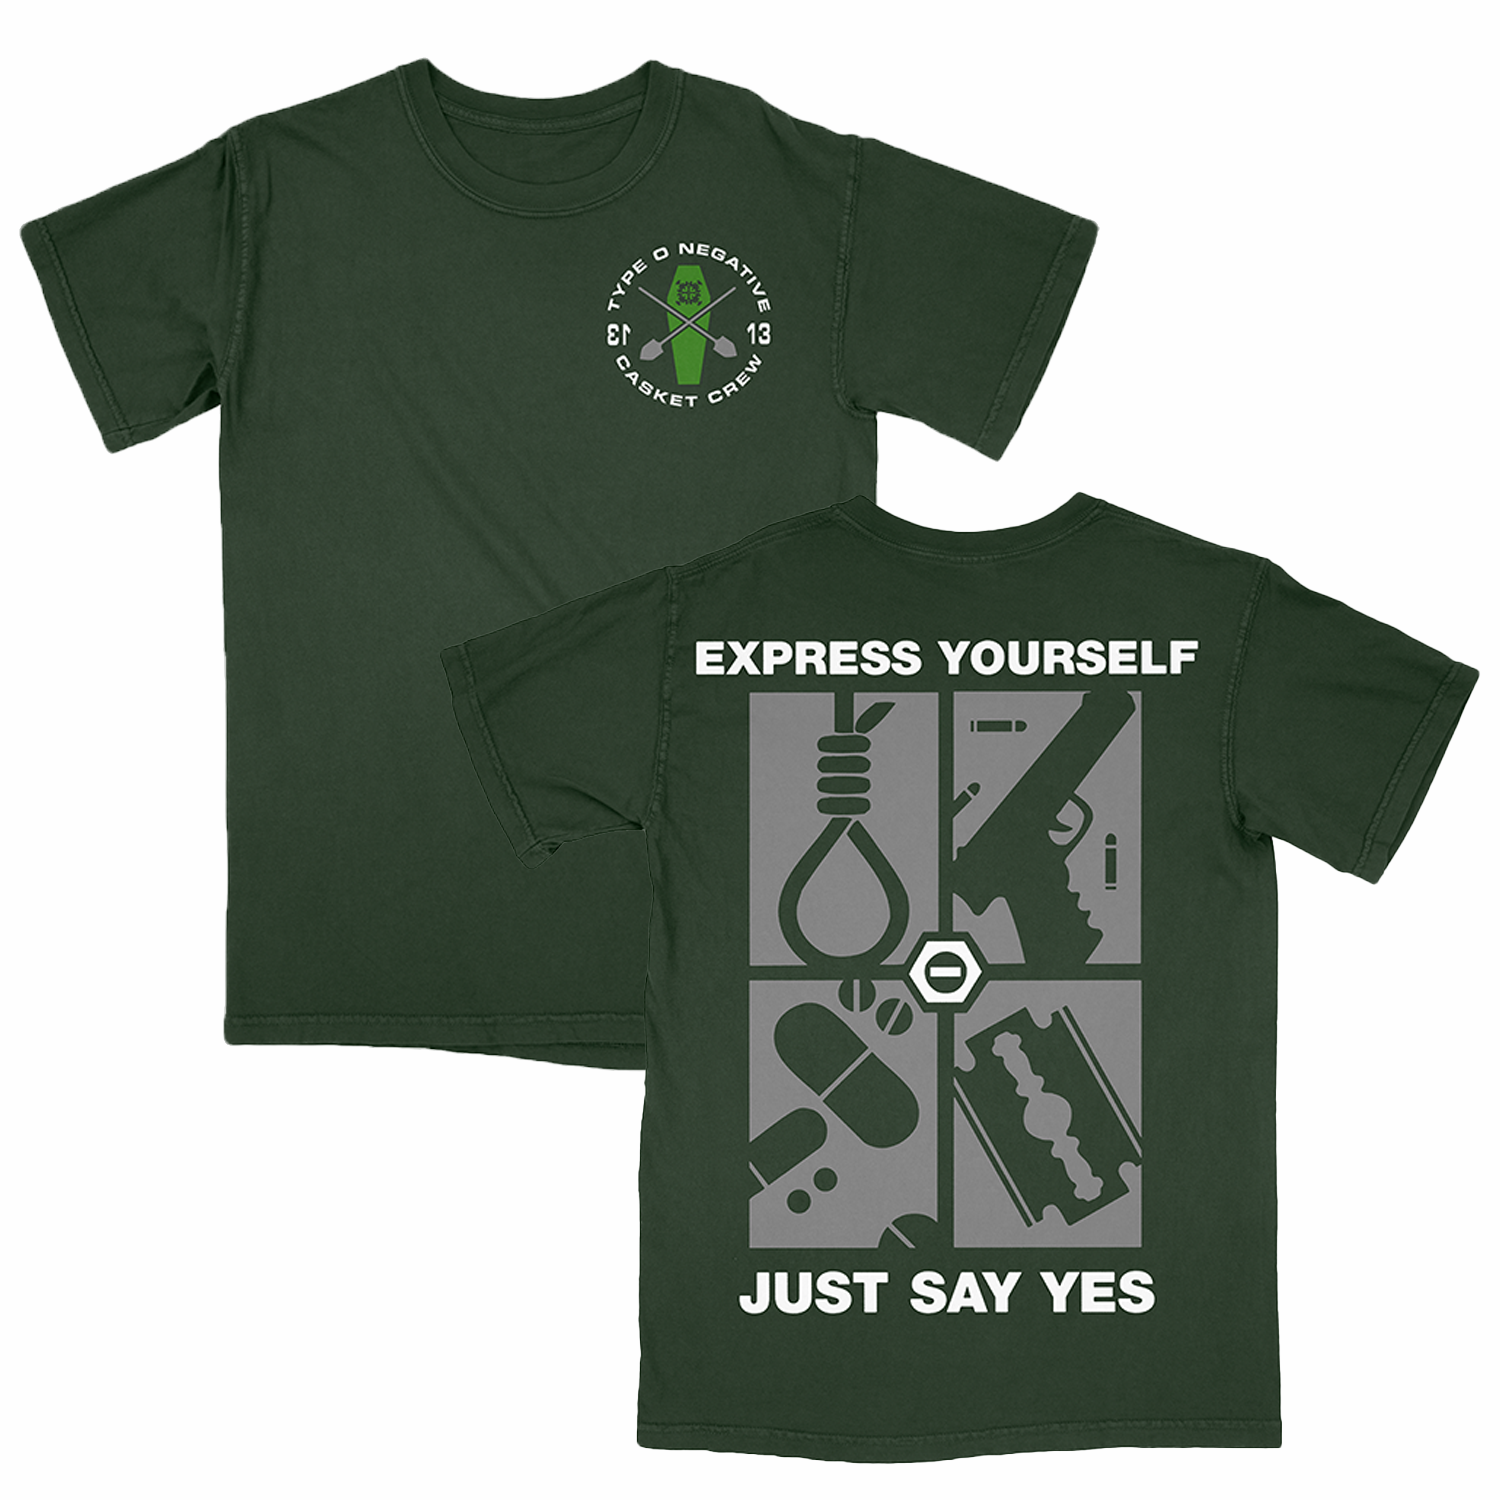 Type O Negative - Express Yourself T-Shirt